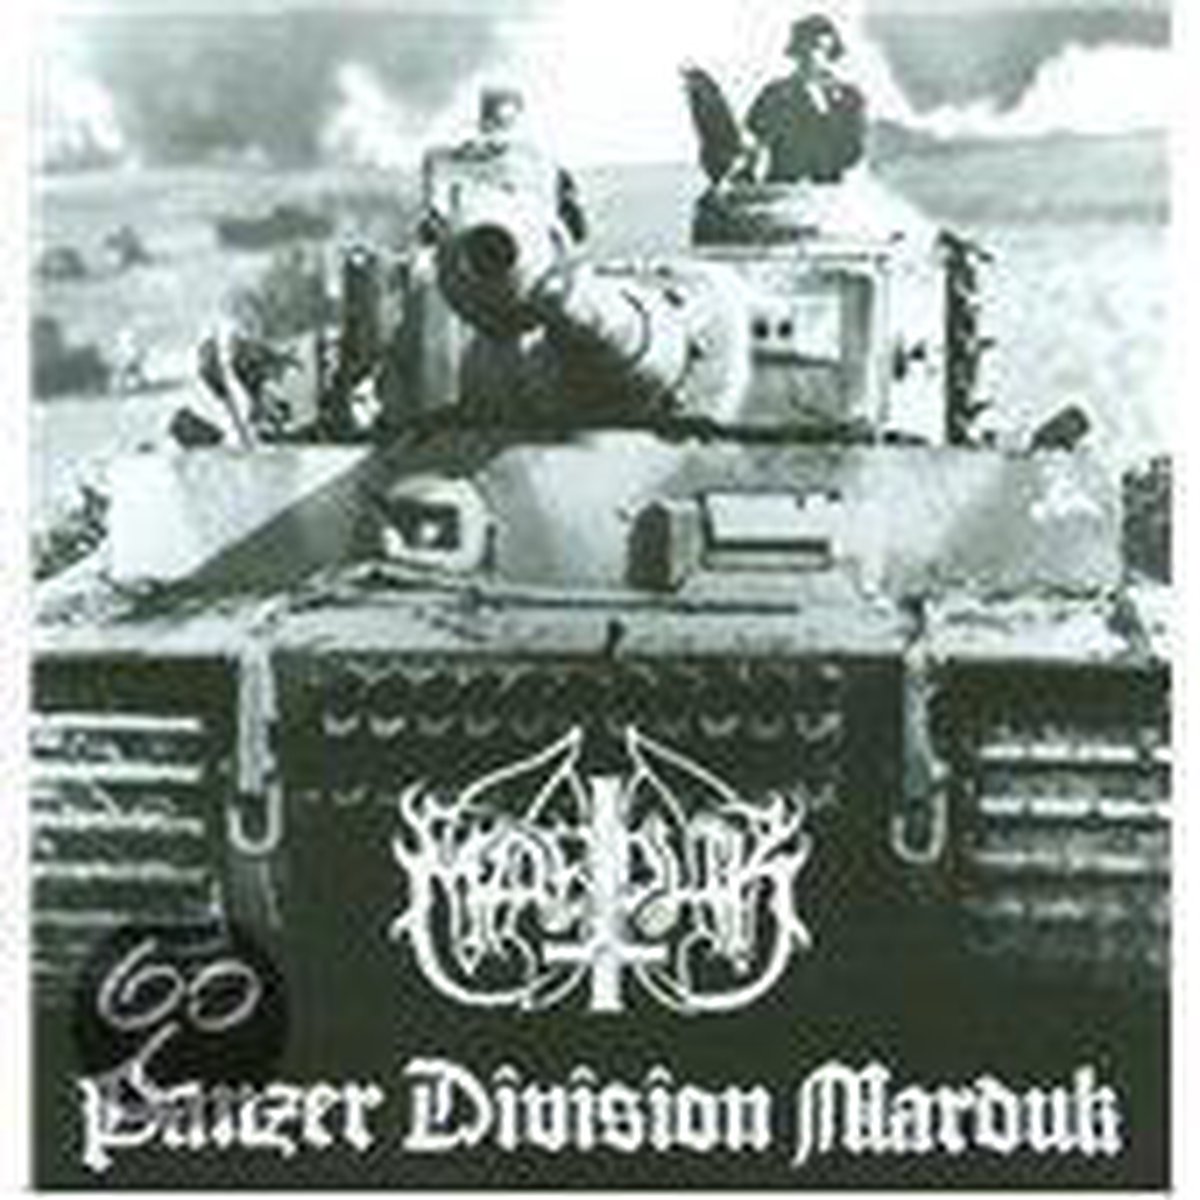 Panzer Division - Marduk